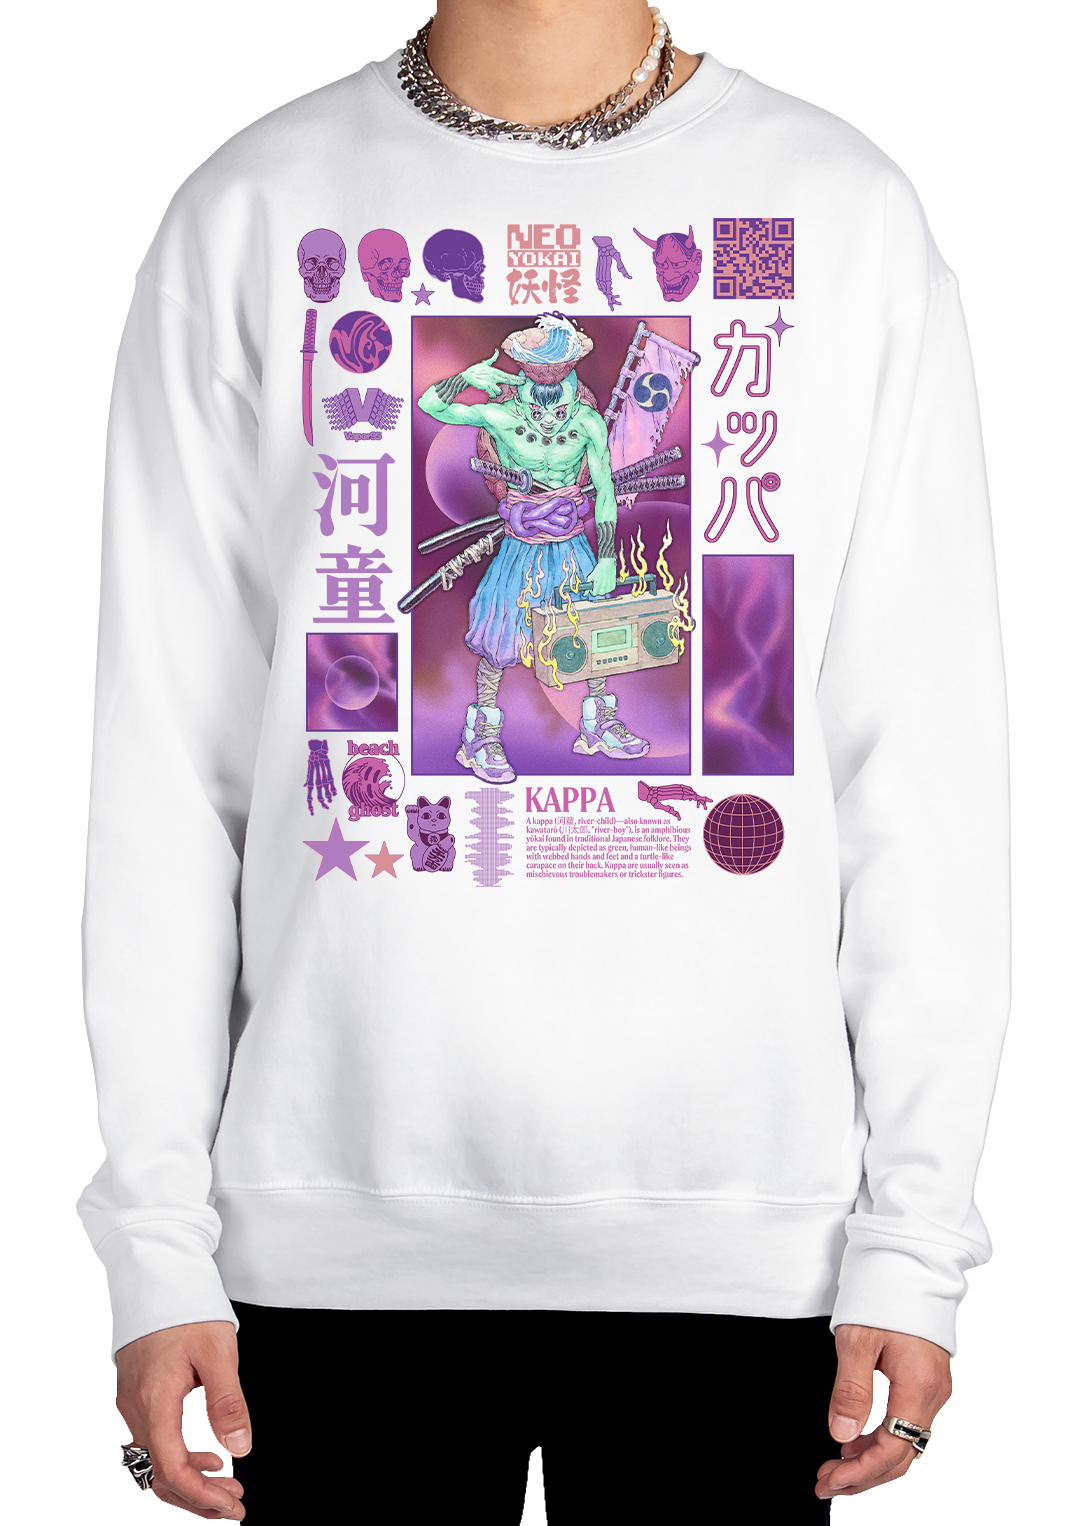 Vaporwave & Clothing Sweatshirt Aesthetic | – Kappa Vapor95